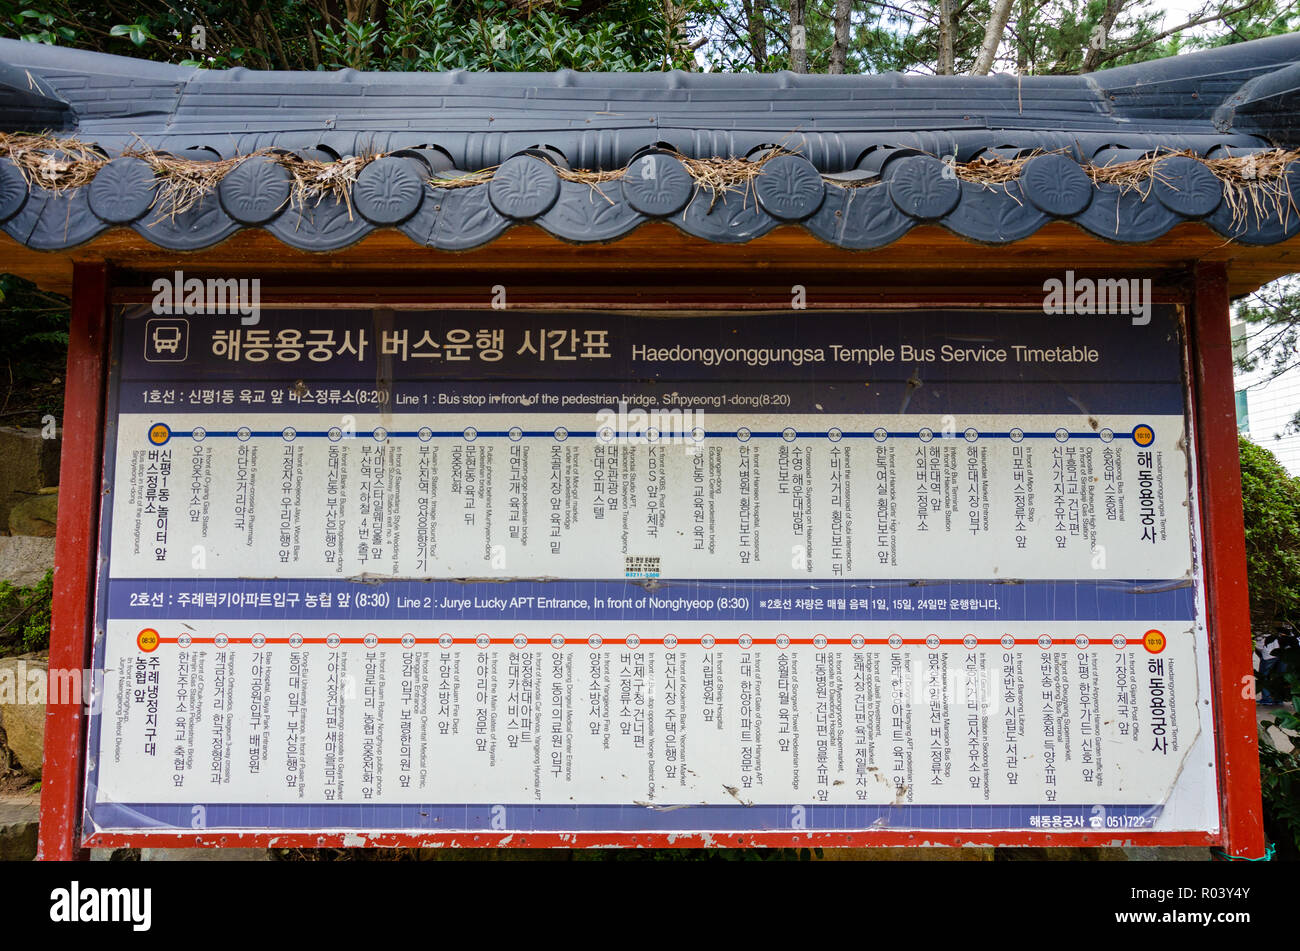 The an information board showing the Haedong Yonggungsa Temple bus service timetable in Busan, South Korea. Stock Photo